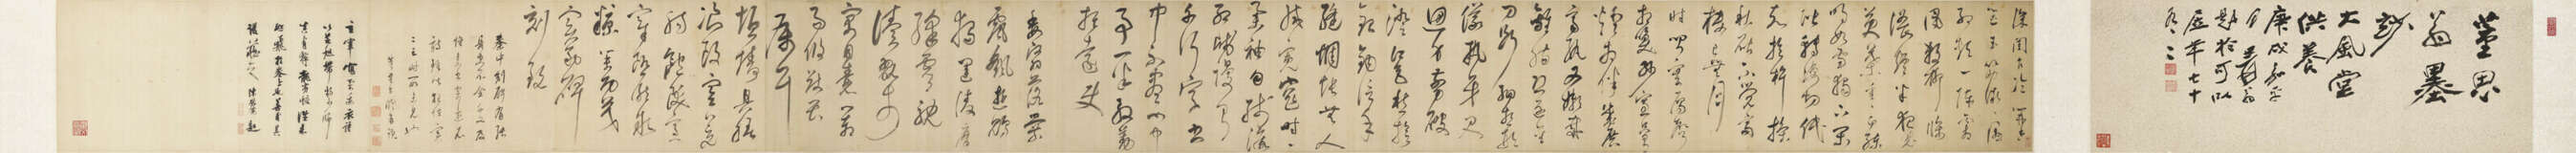 DONG QICHANG (1555-1636) - фото 1